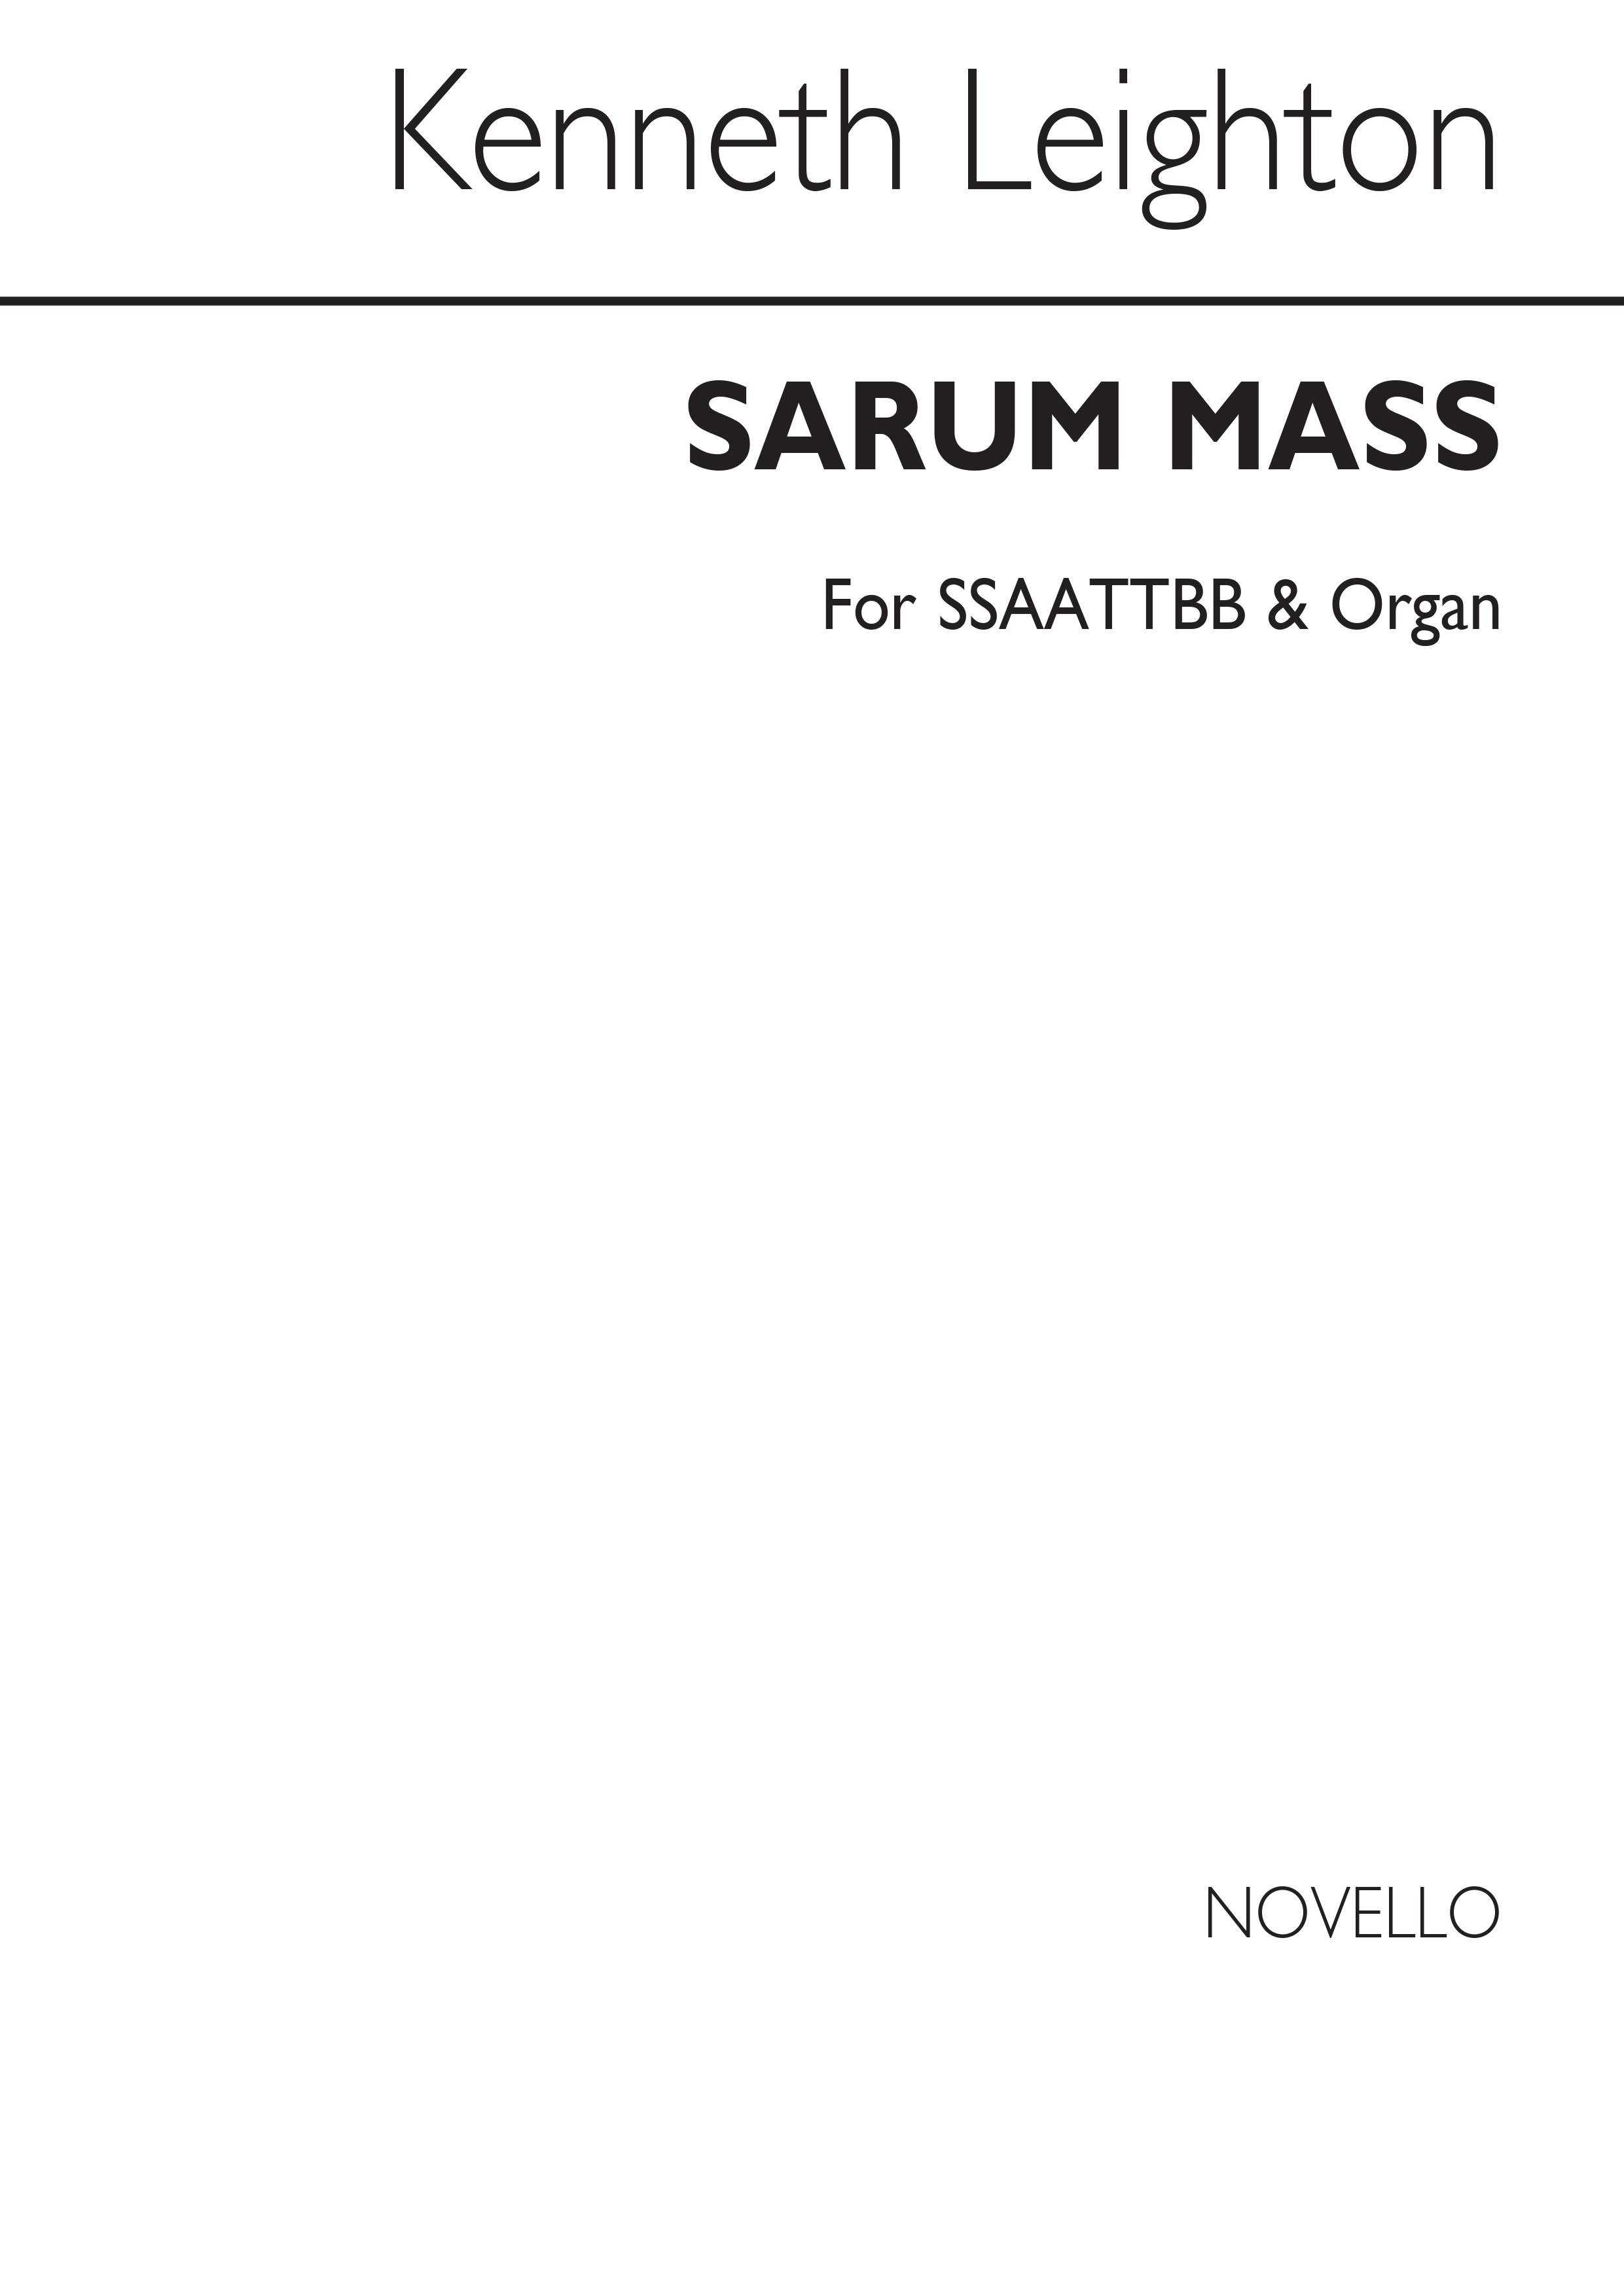 Kenneth Leighton: Sarum Mass